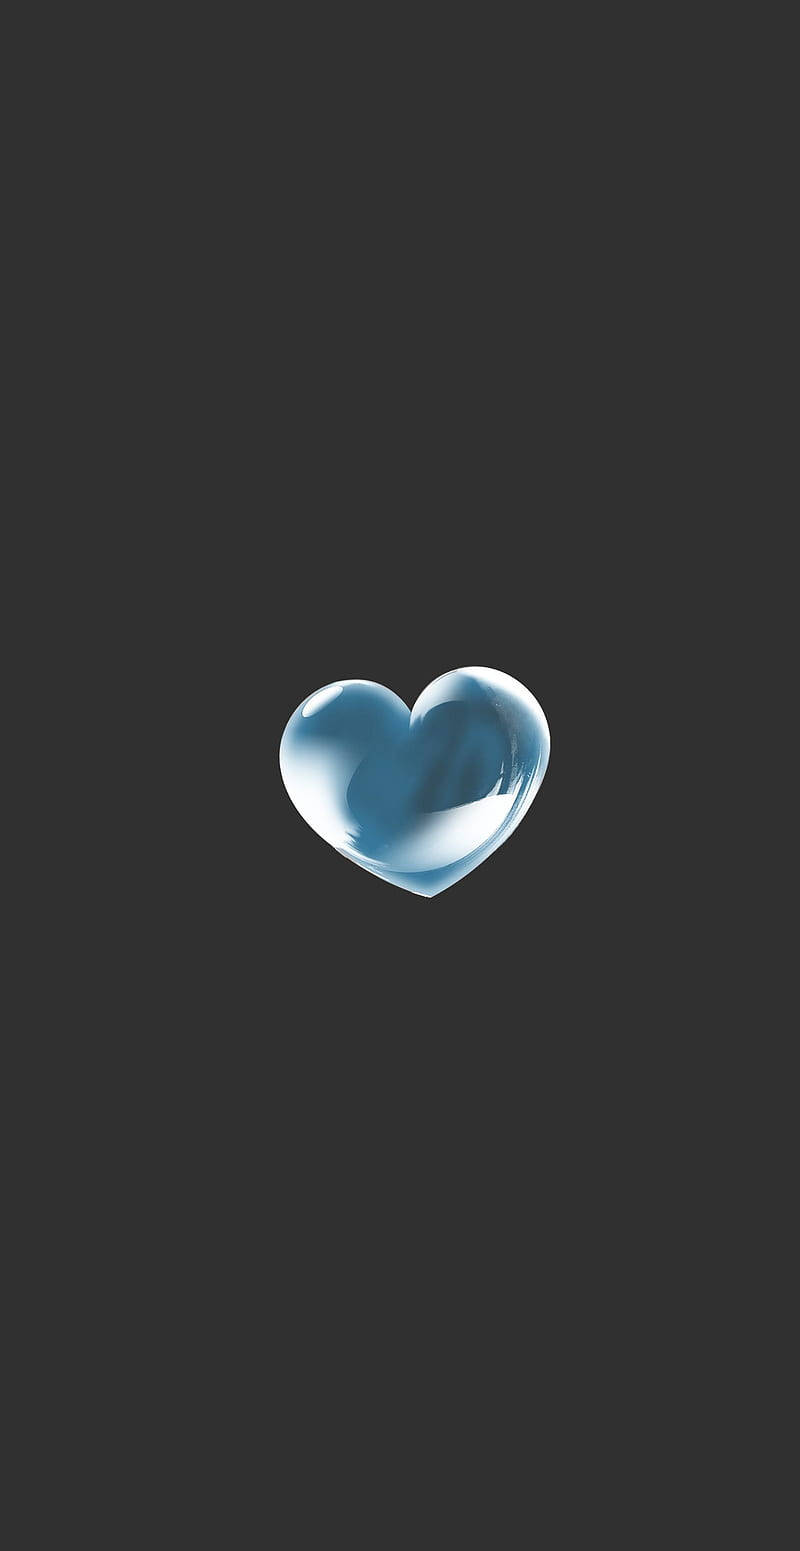 Blue Heart Digital Art Background